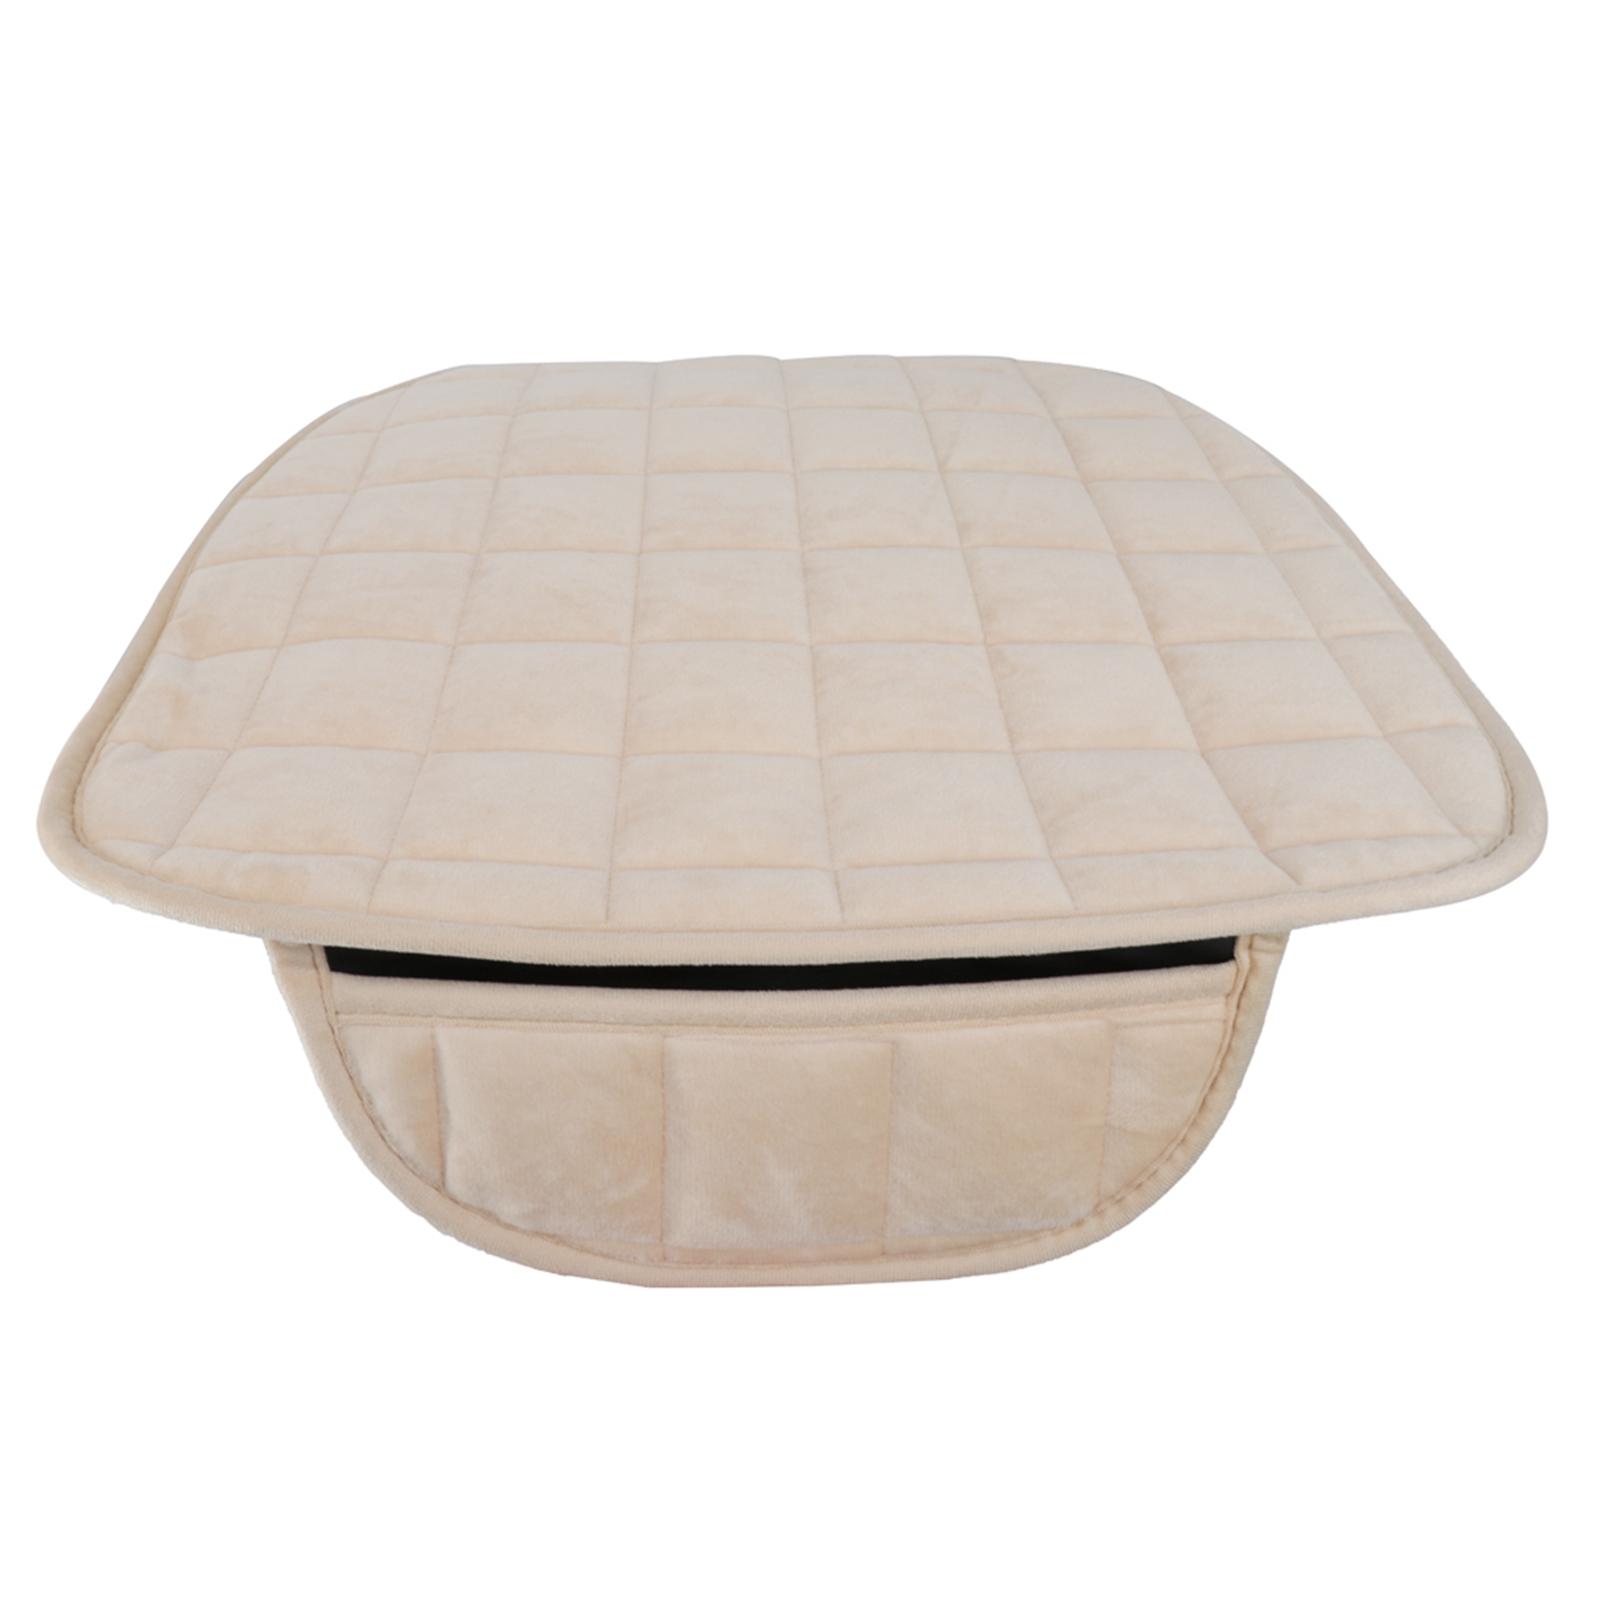 1x Car Seat Winter Anti Slip Cushion Soft Breathable Seat Cover Supplies Beige